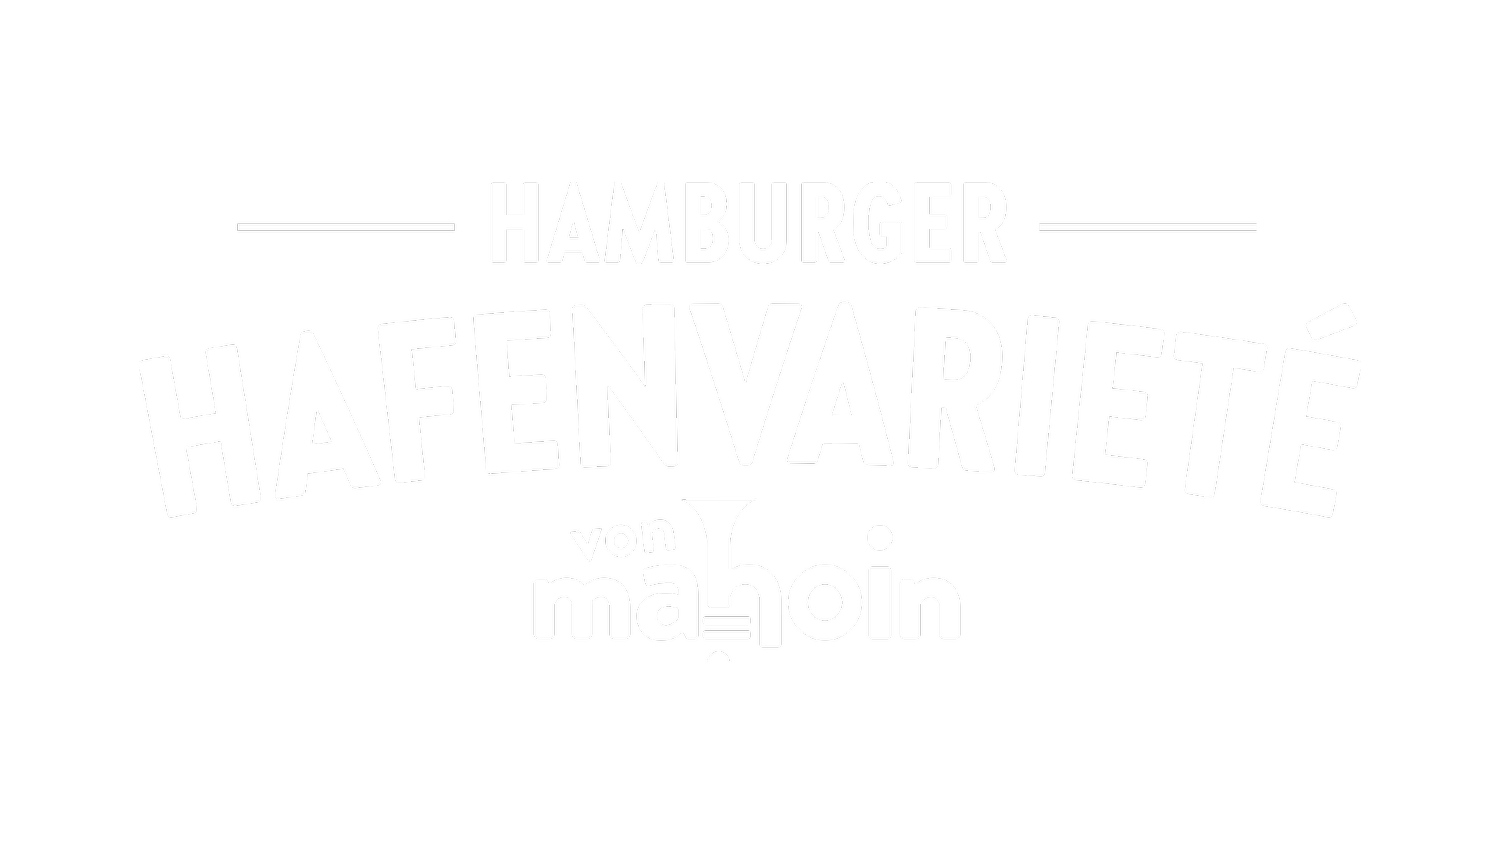 Hamburger Hafenvarieté